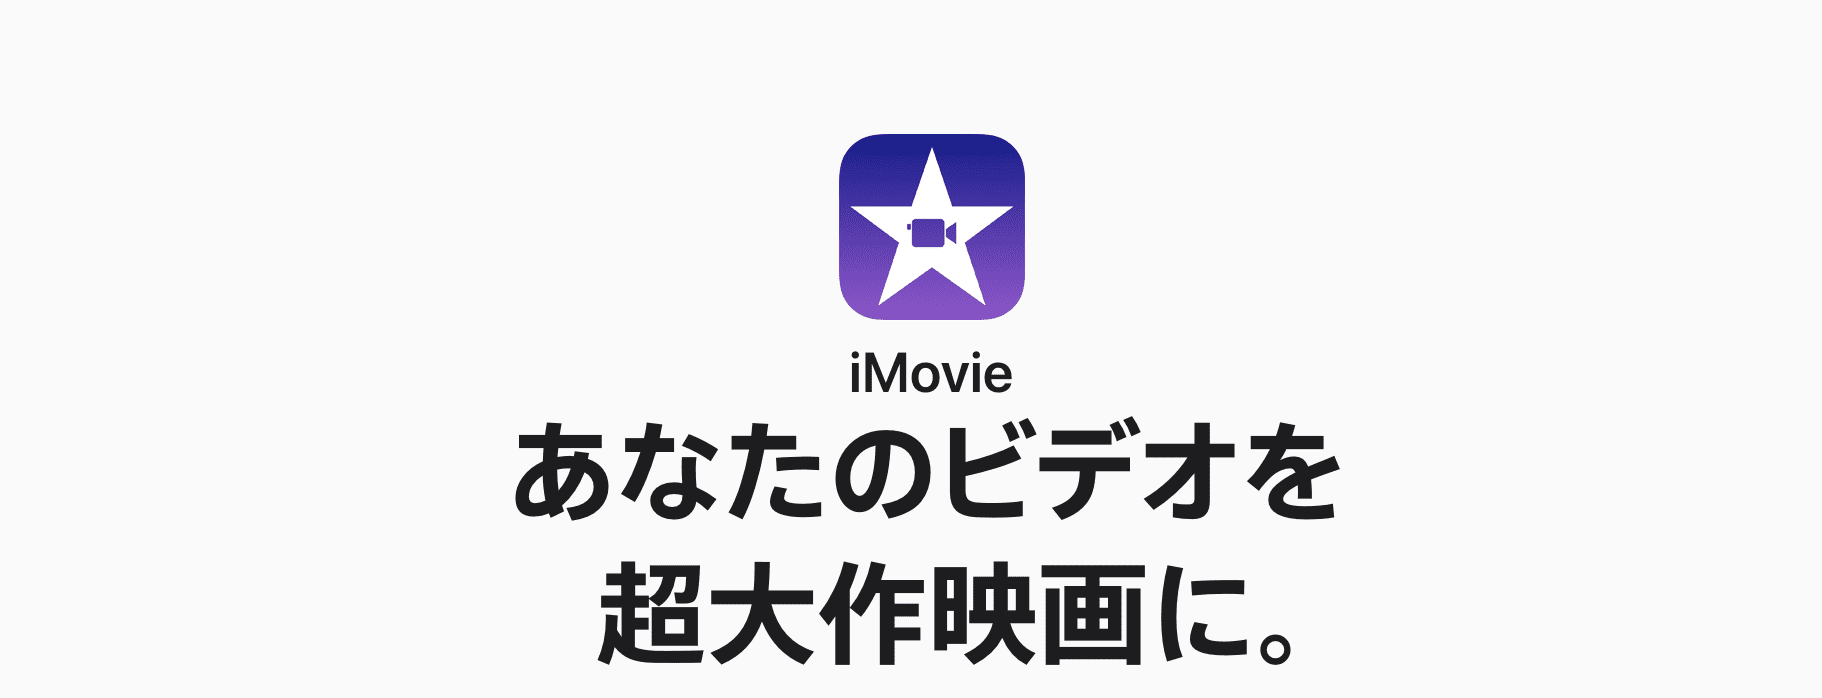 Macユーザーなら「iMovie」もあり